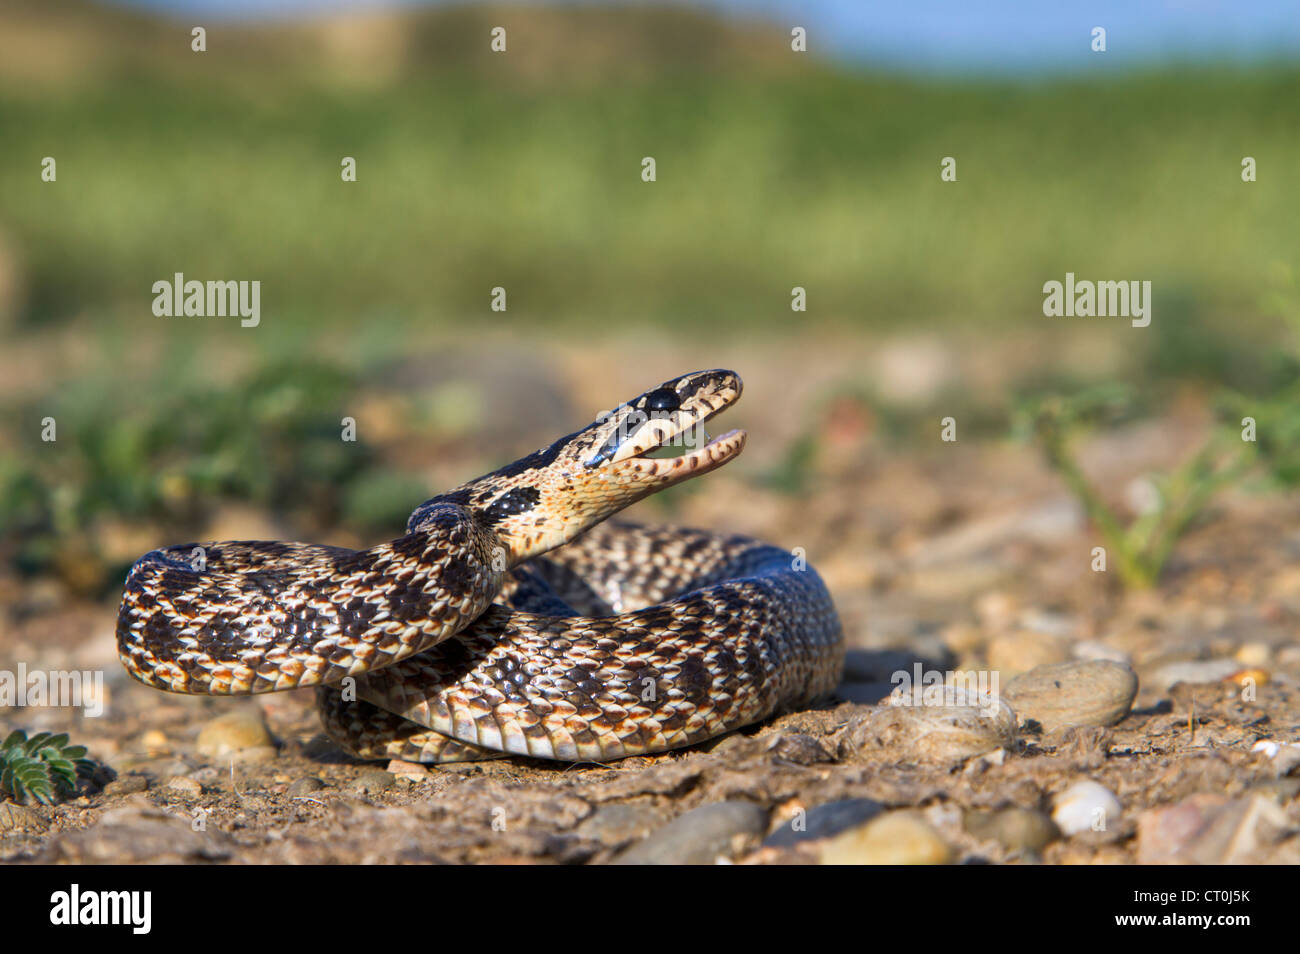 The blotched snake, or eastern fourlined ratsnake (Elaphe sauromates) prepared to defensive strike. Stock Photo